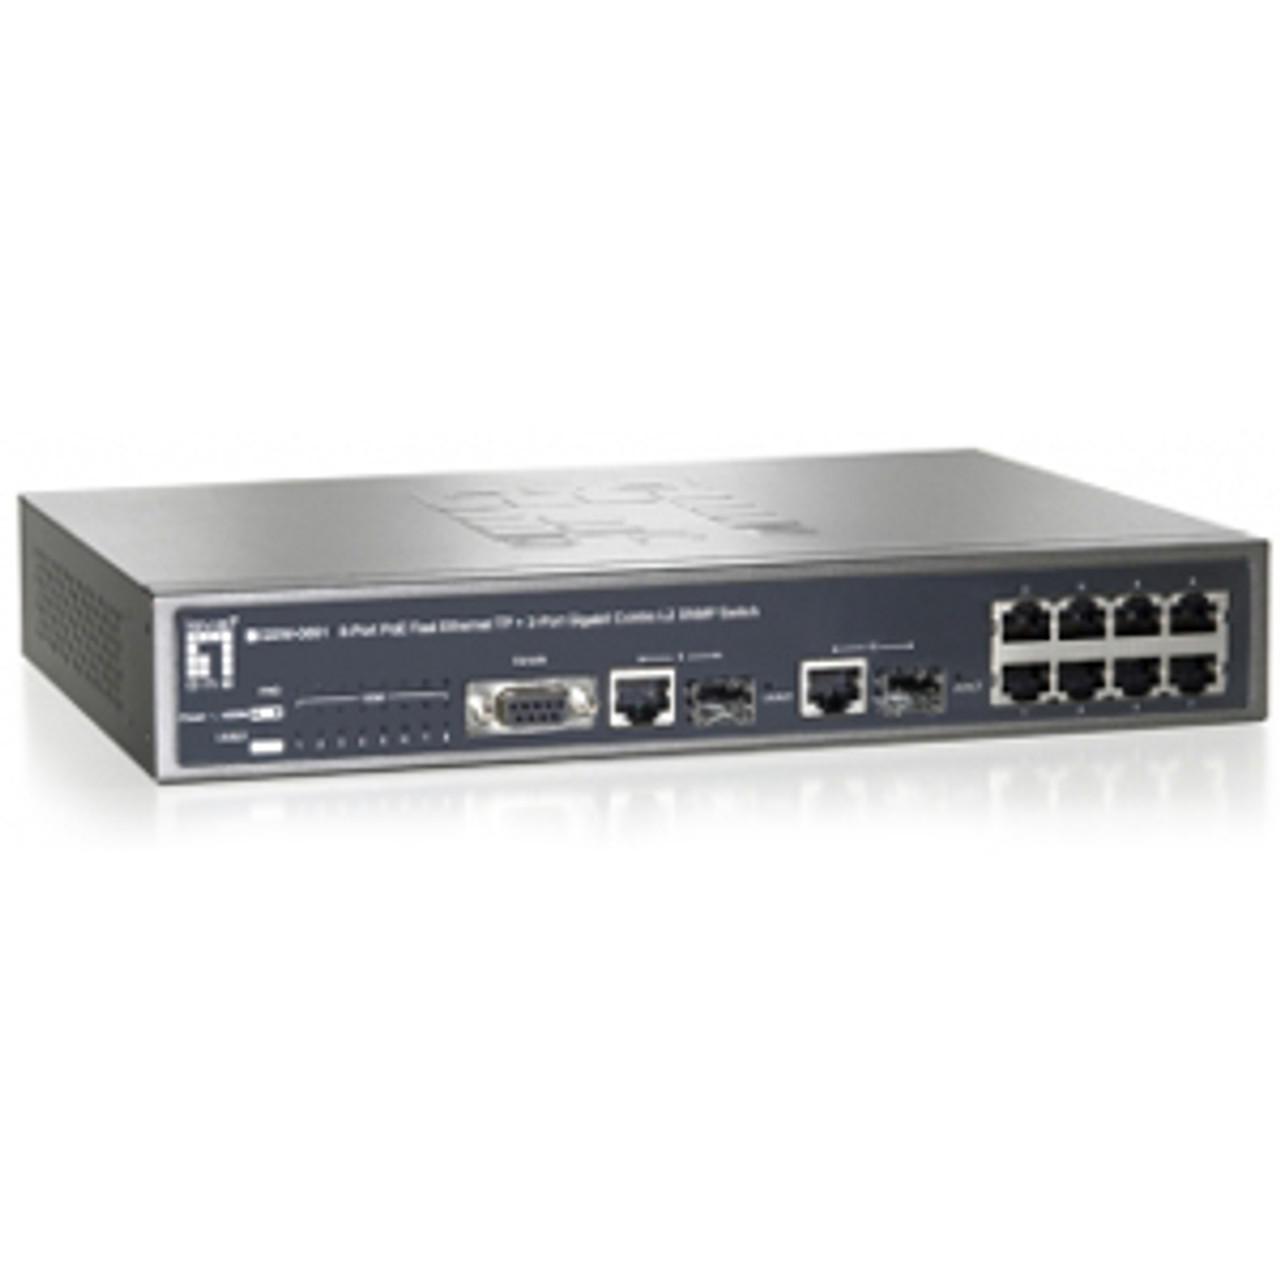 GSW-0891 LevelOne Managed 8-Port 10/100 PoE TP+ 2 SFP Ports L2 SNMP 19 Rack Mountable Switch 2 x SFP (mini-GBIC) 8 x 10/100Base-TX, 2 x 10/100/1000Base-T